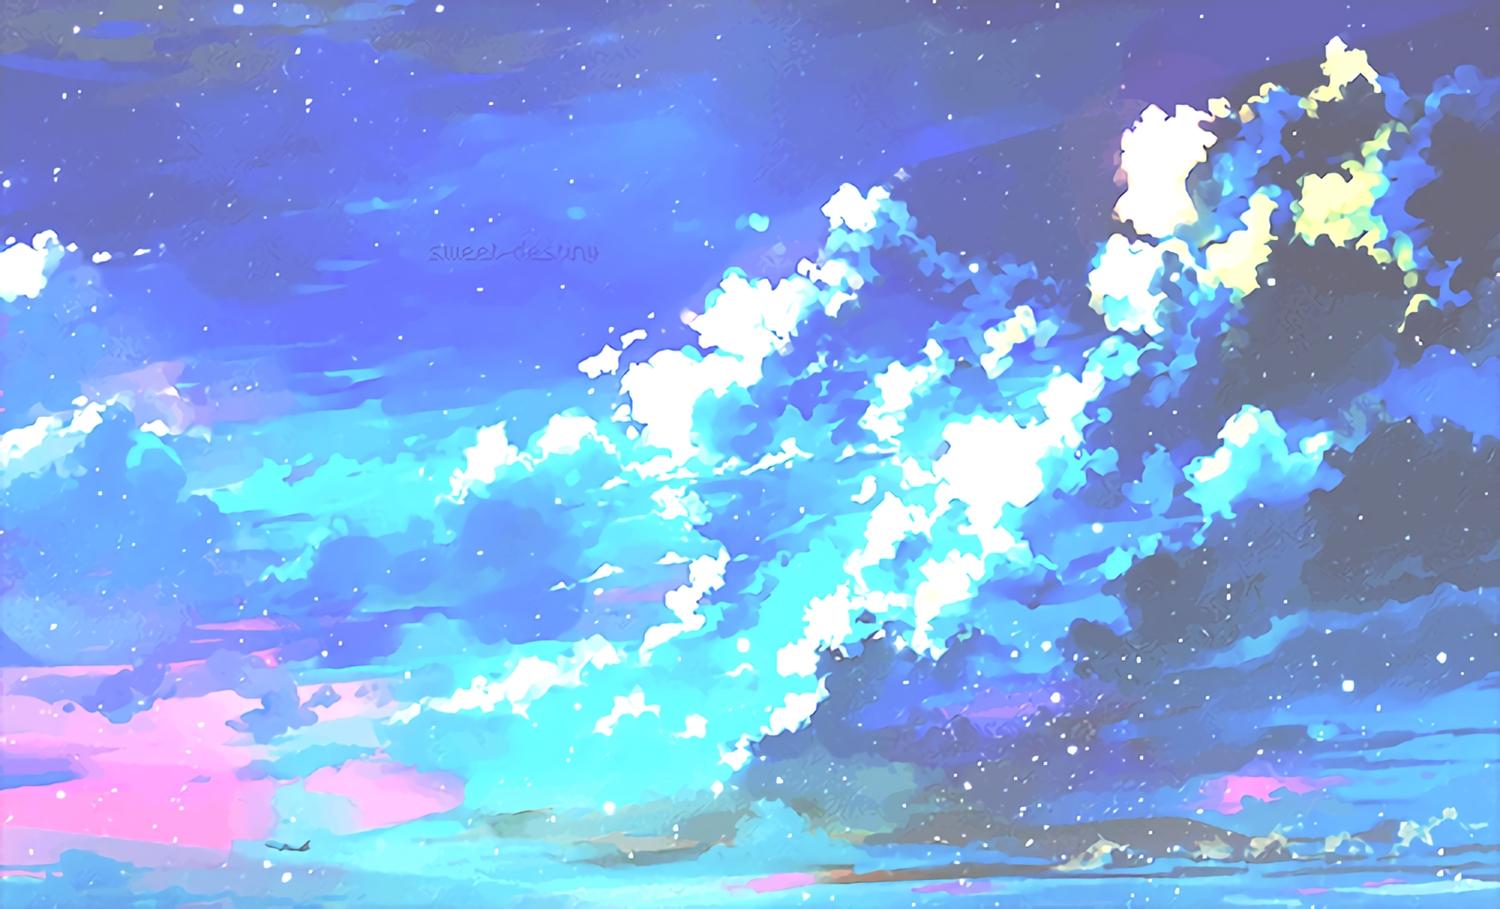 Download wallpaper 2160x3840 anime, girl, sky, clouds samsung galaxy s4,  s5, note, sony xperia z, z1, z2, z3, htc one, lenovo vibe hd background